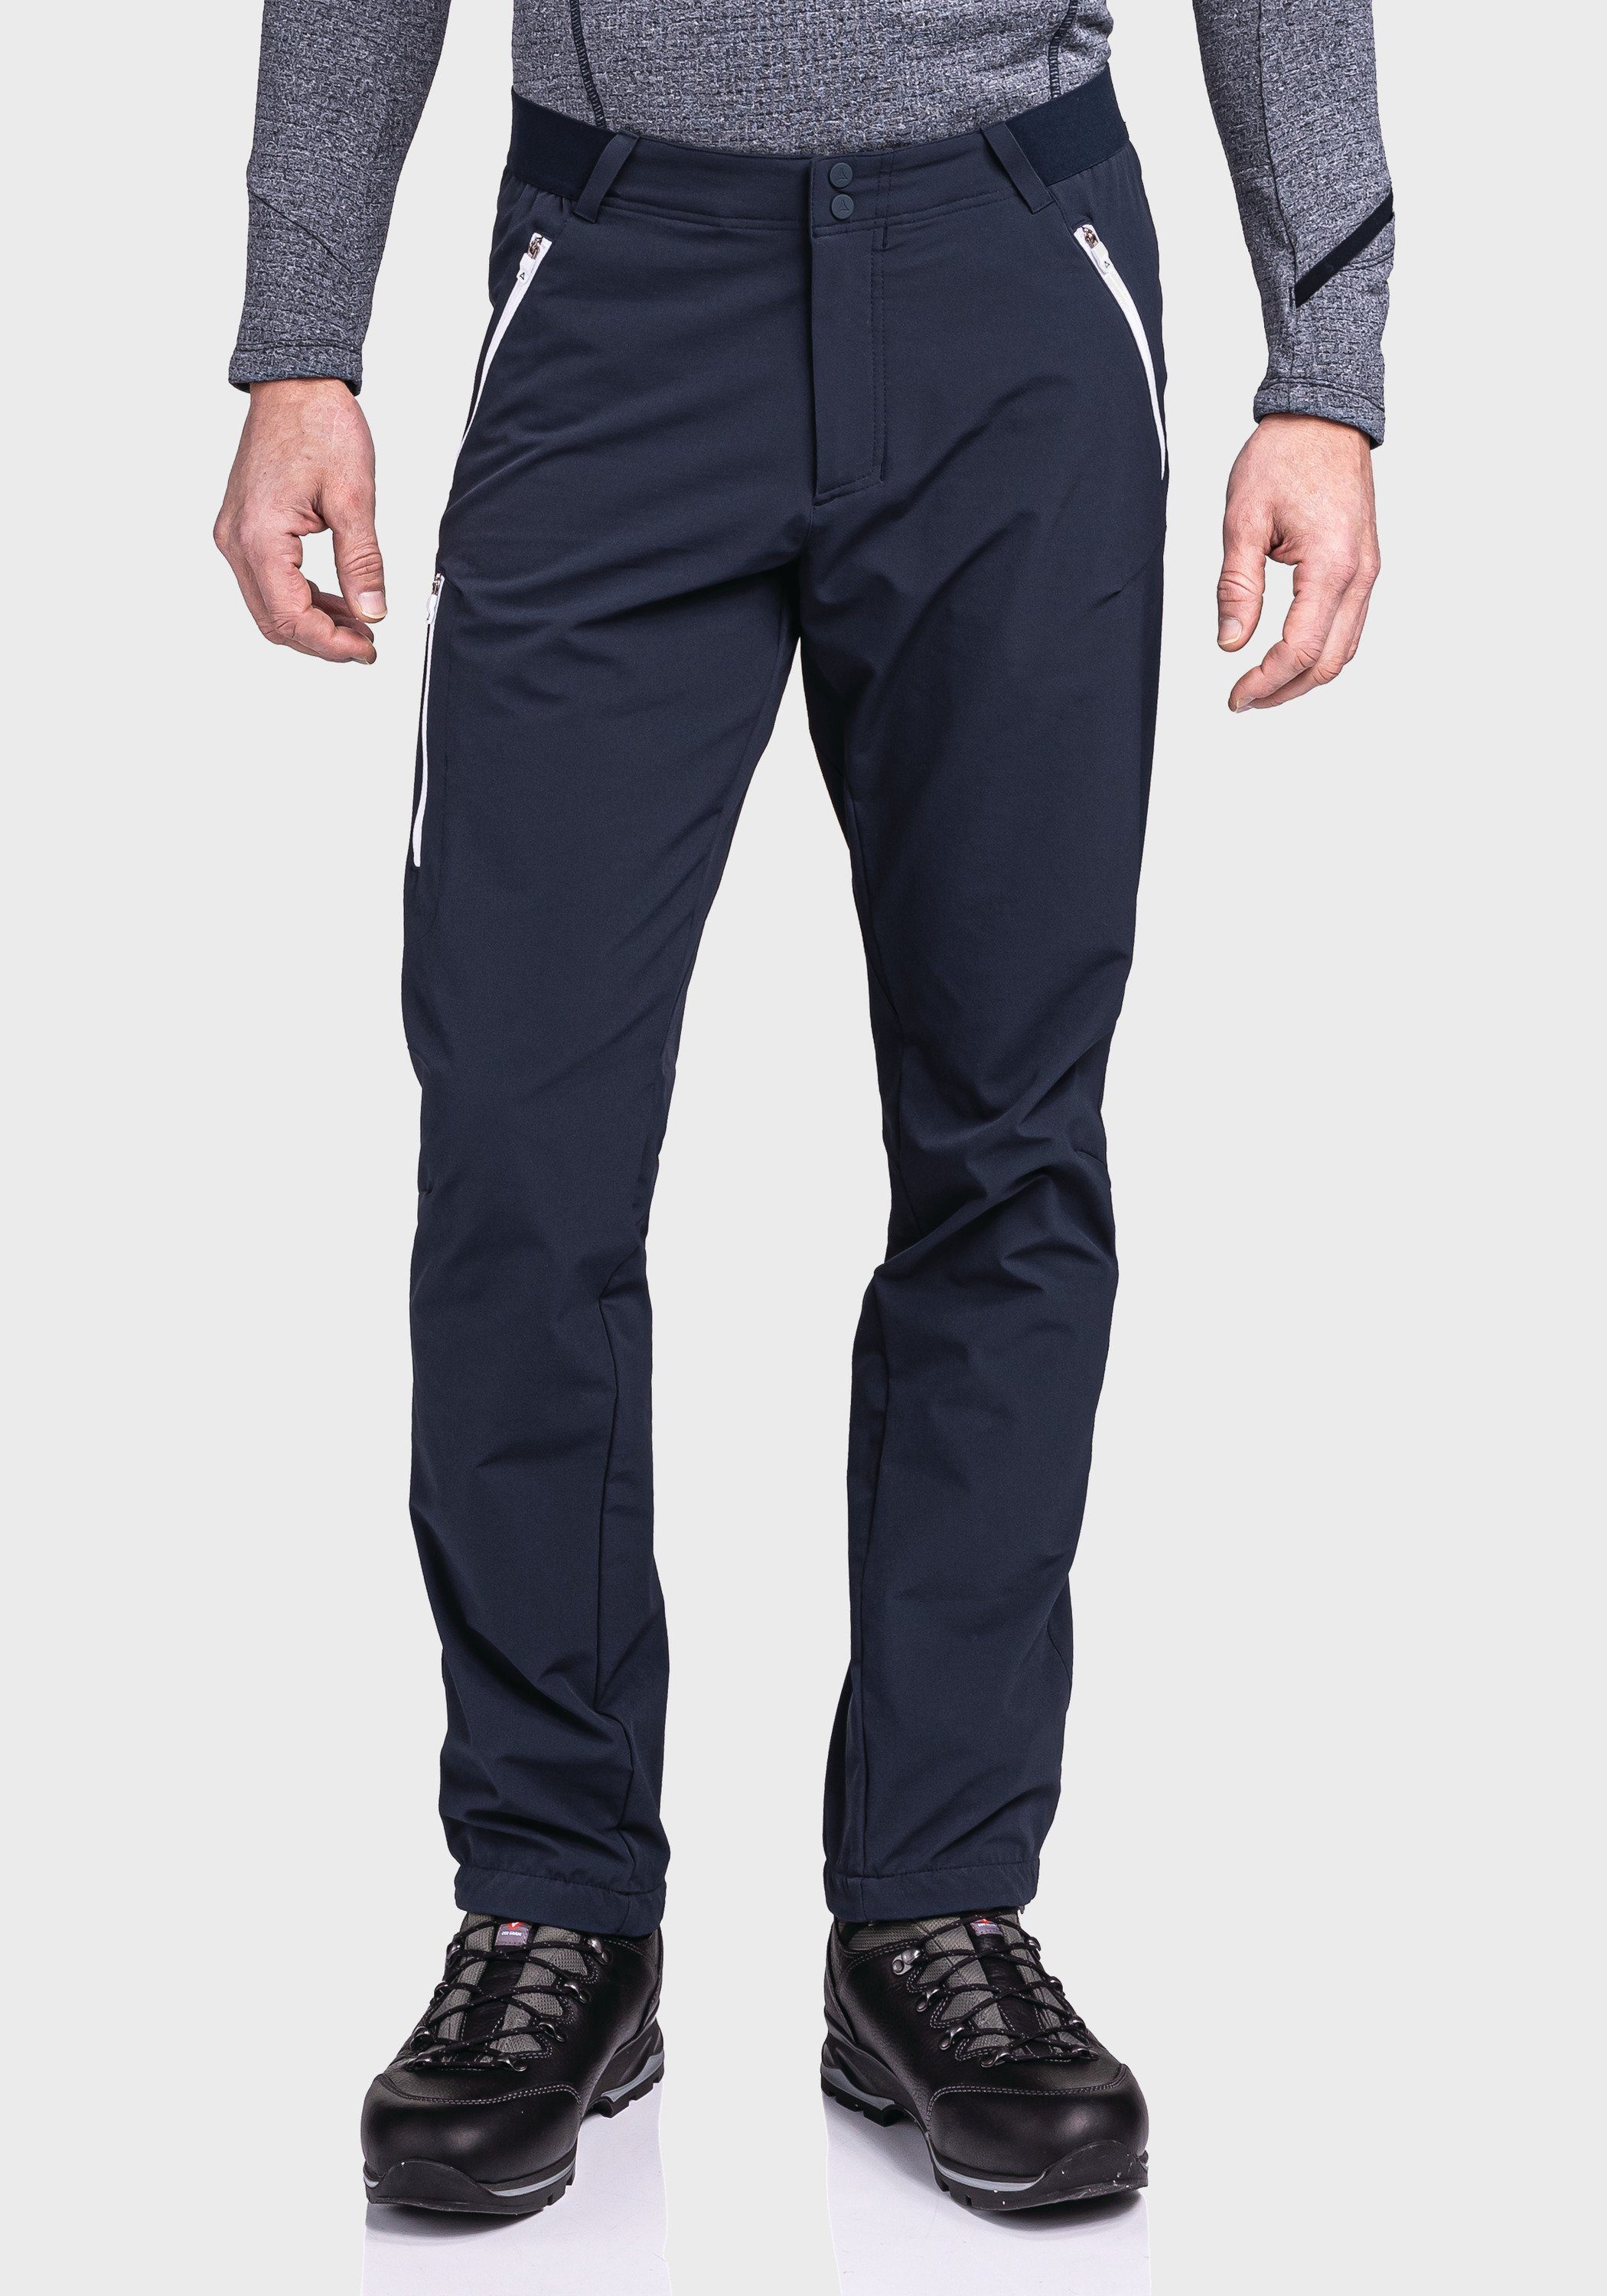 Hochfilzen Schöffel Outdoorhose Pants M blau